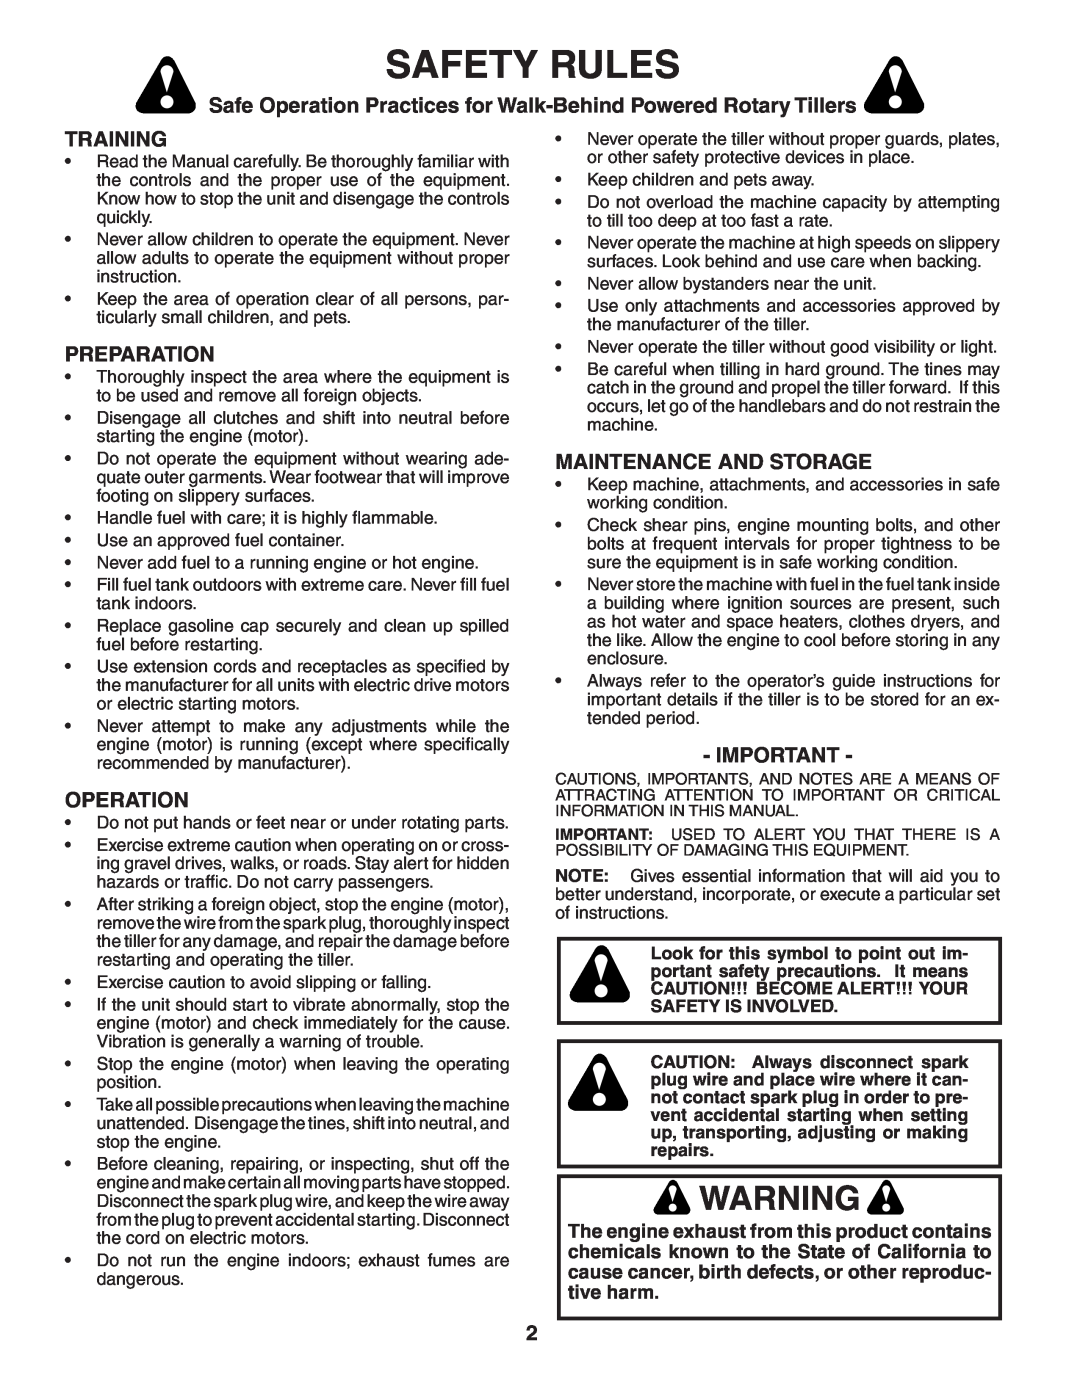 Poulan PRRT50 manual Safety Rules, Training, Preparation, Operation, Maintenance And Storage 